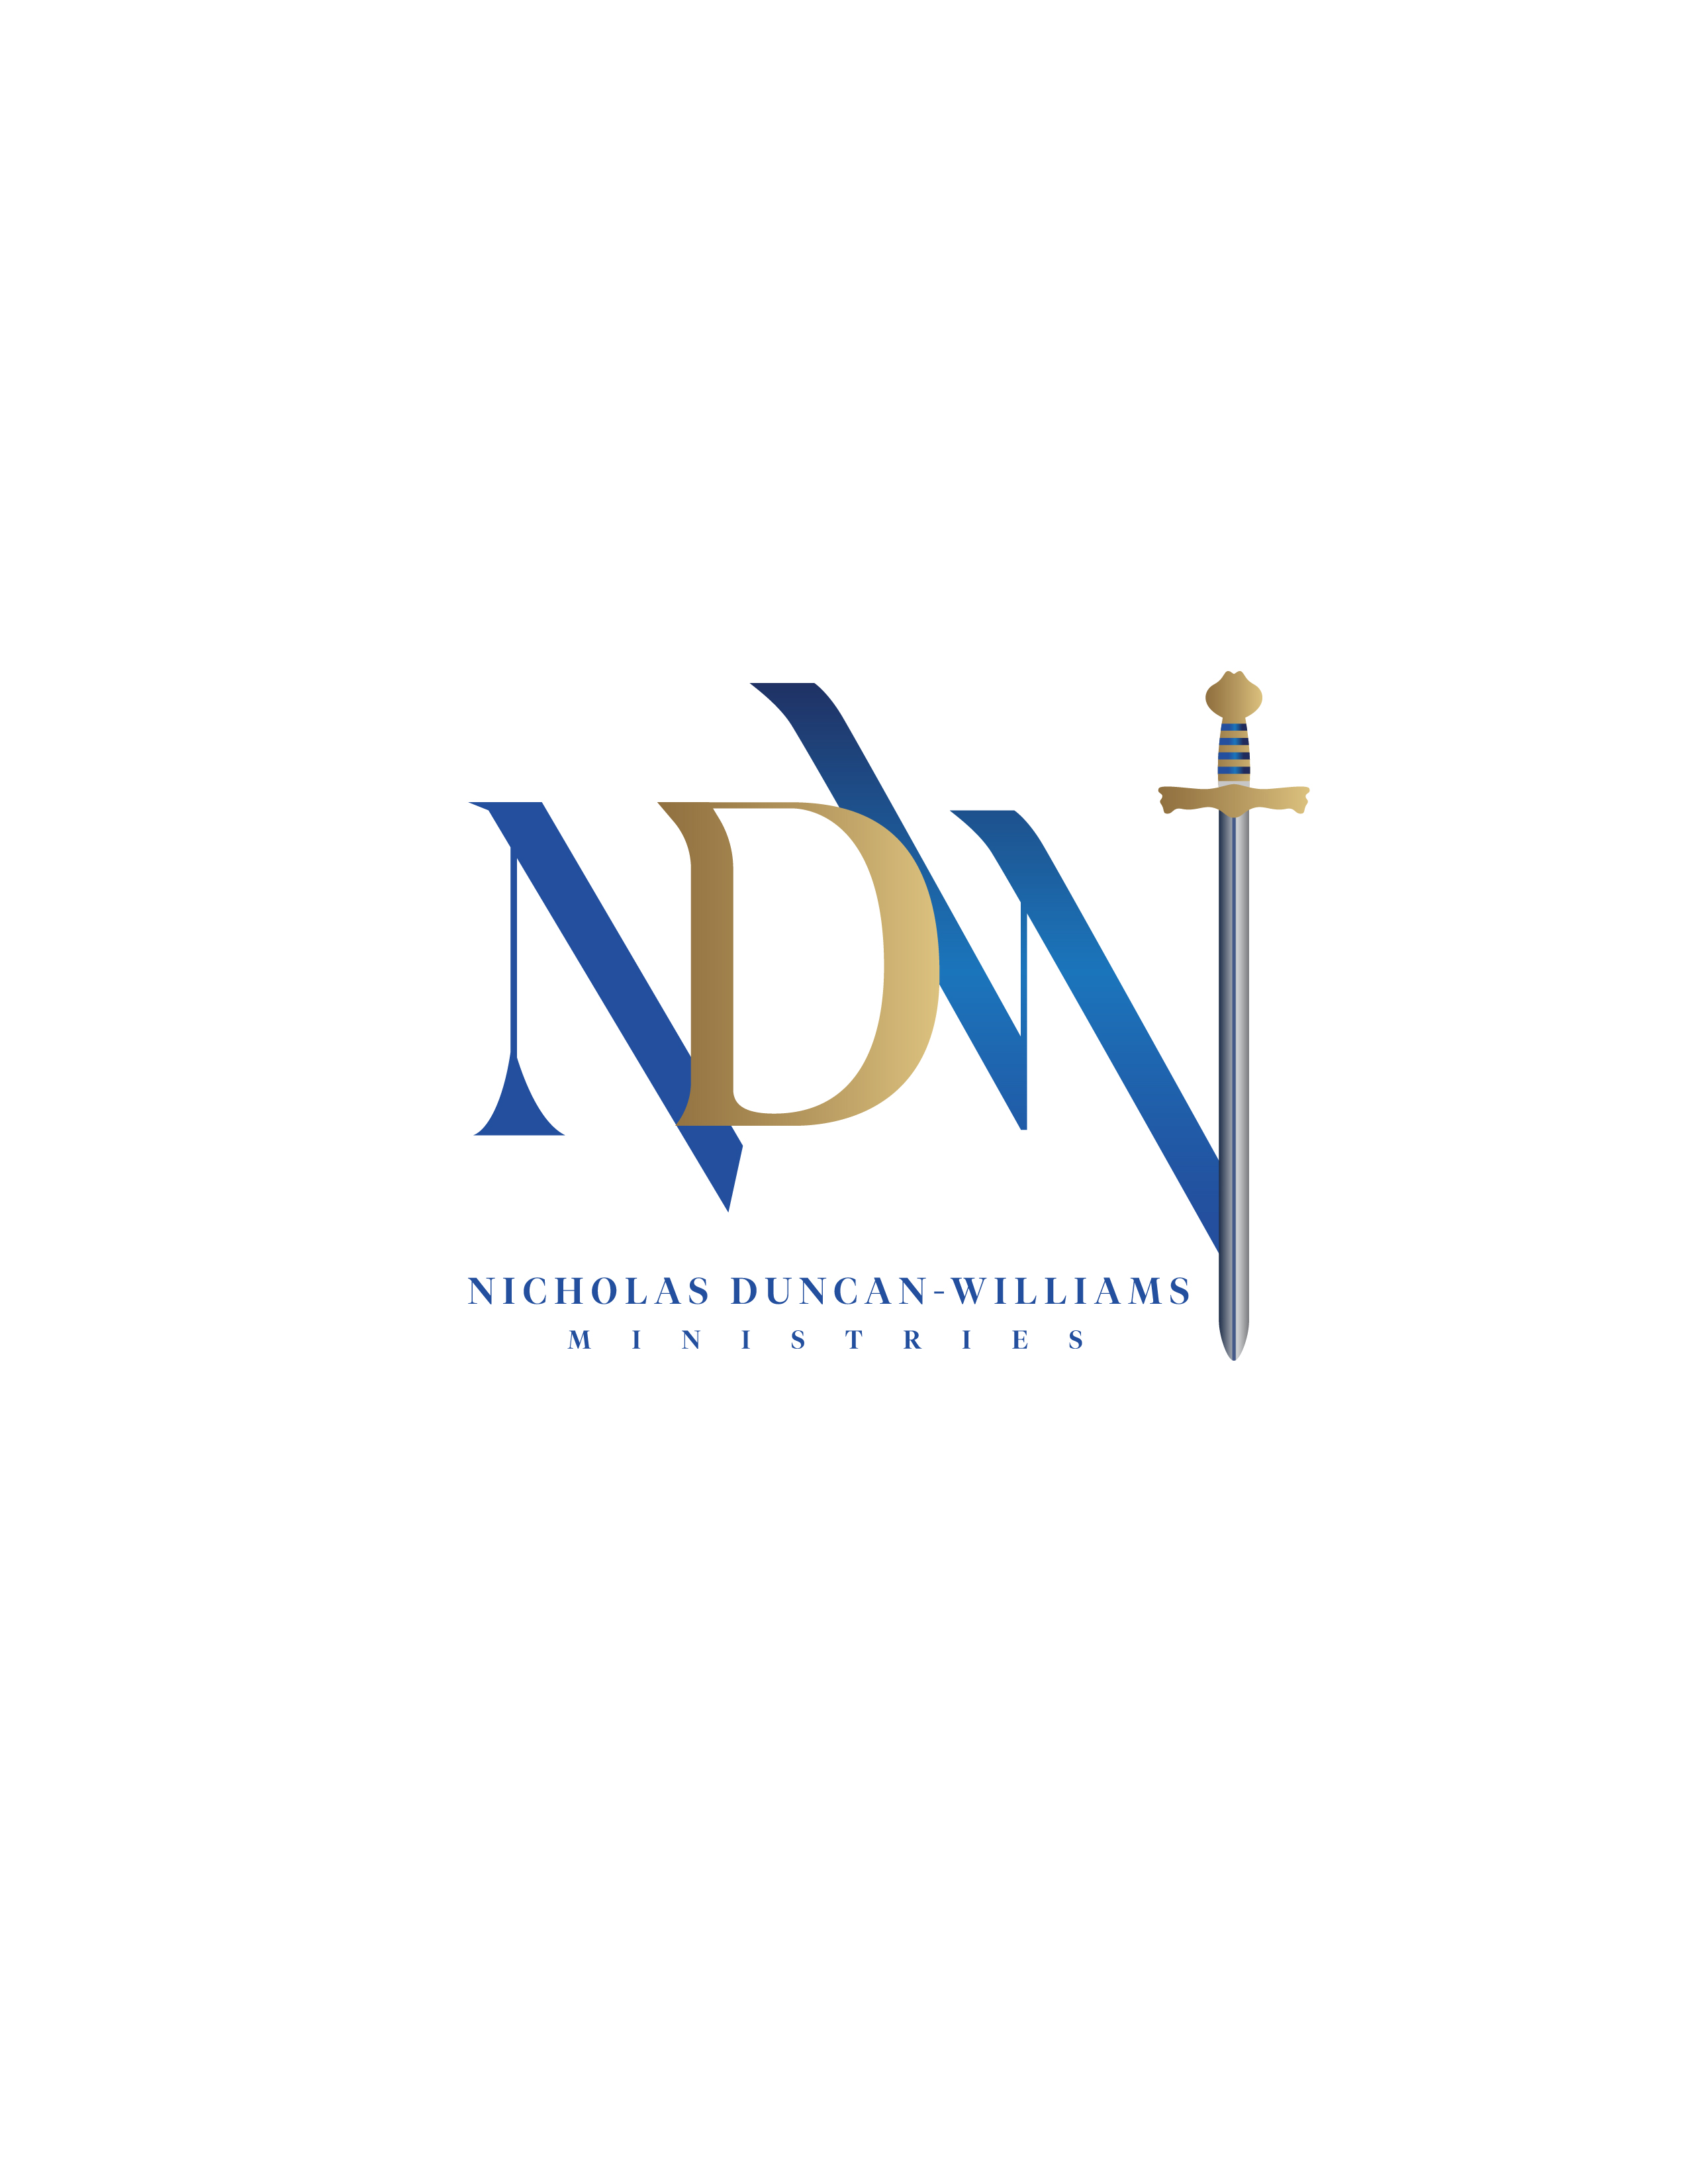 Nicholas Duncan-Williams Ministries - Donations